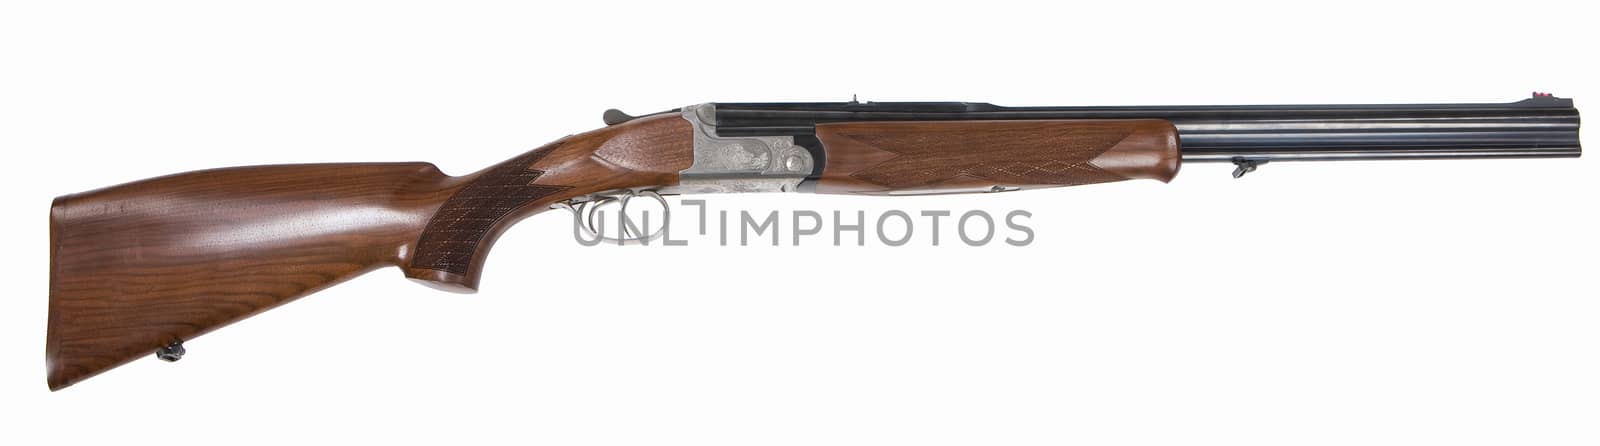 Isolated hunting rifle on white background